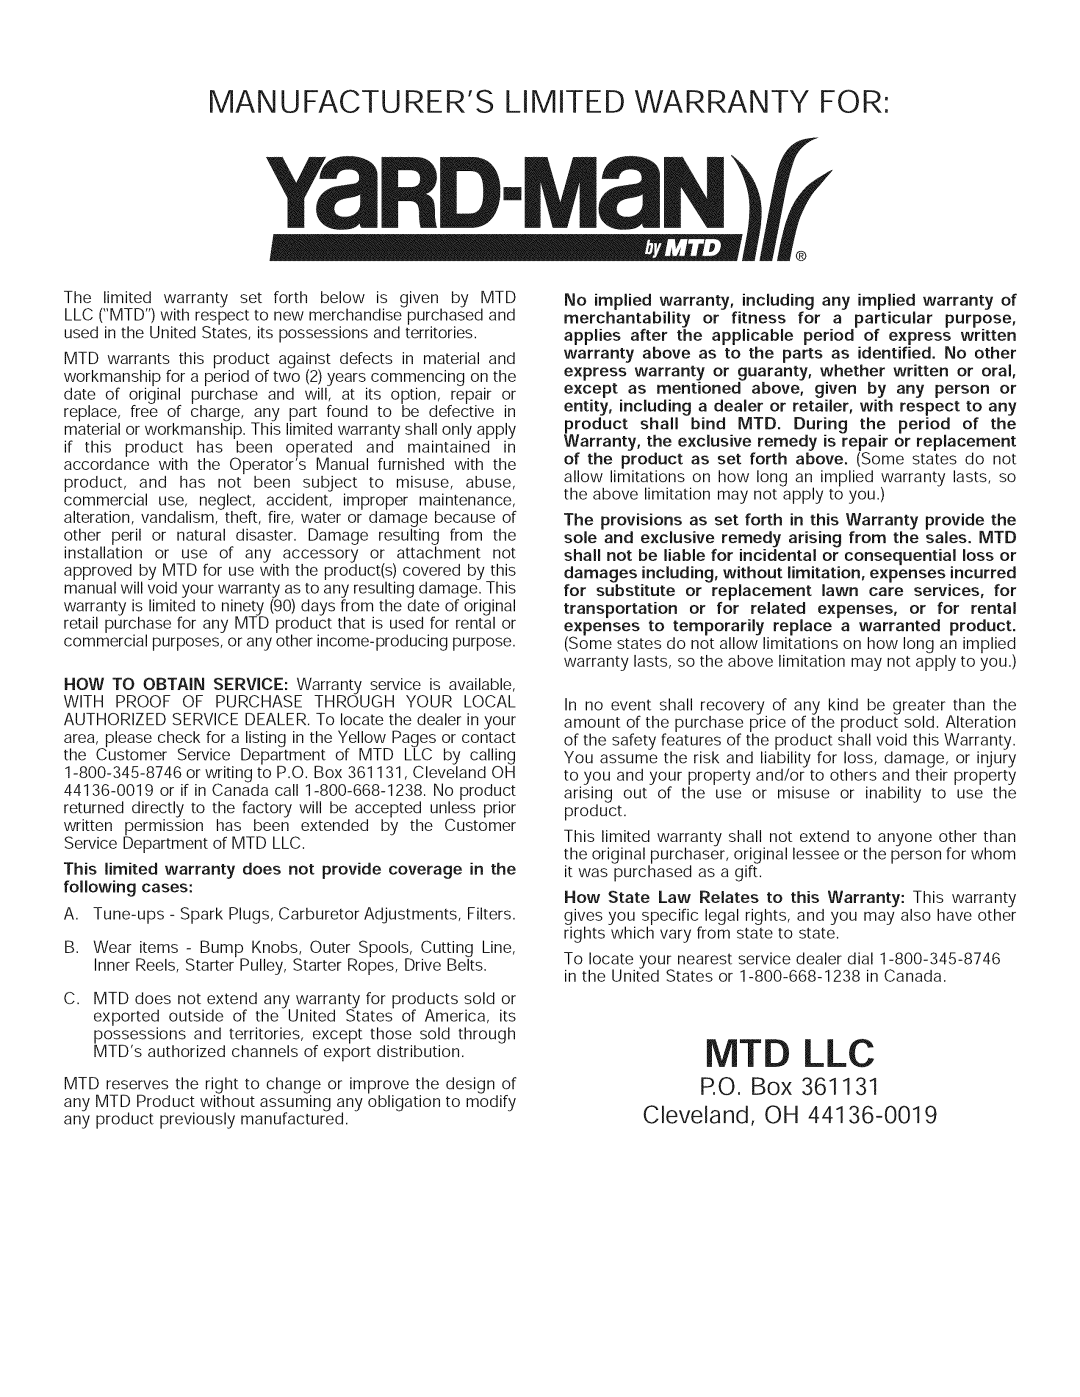 Yard-Man 769.01408 manual Mtd Llc, Manufacturers Limited Warranty For 